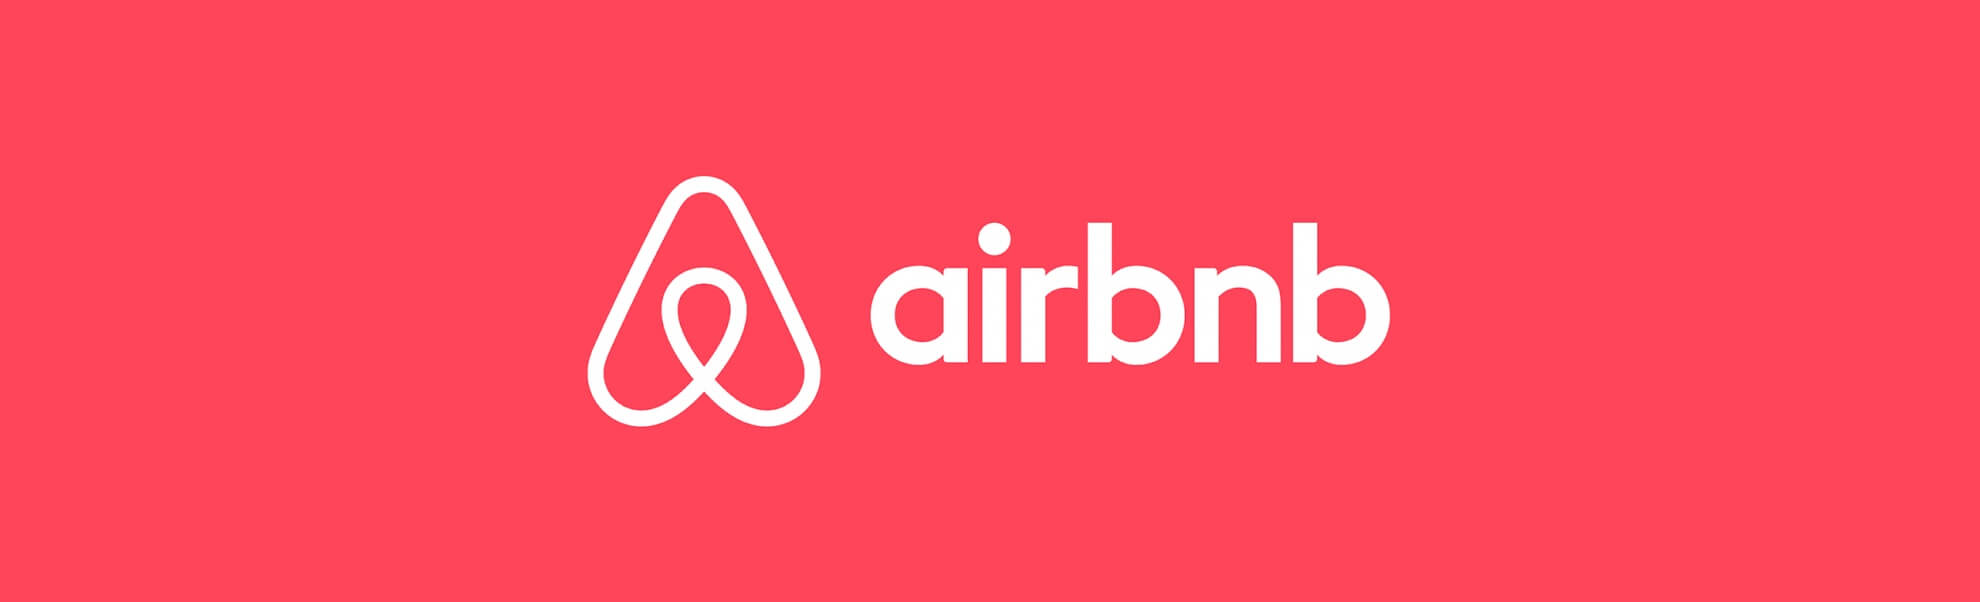 https://dailyweb.pl/wp-content/uploads/2020/02/airbnb.jpg